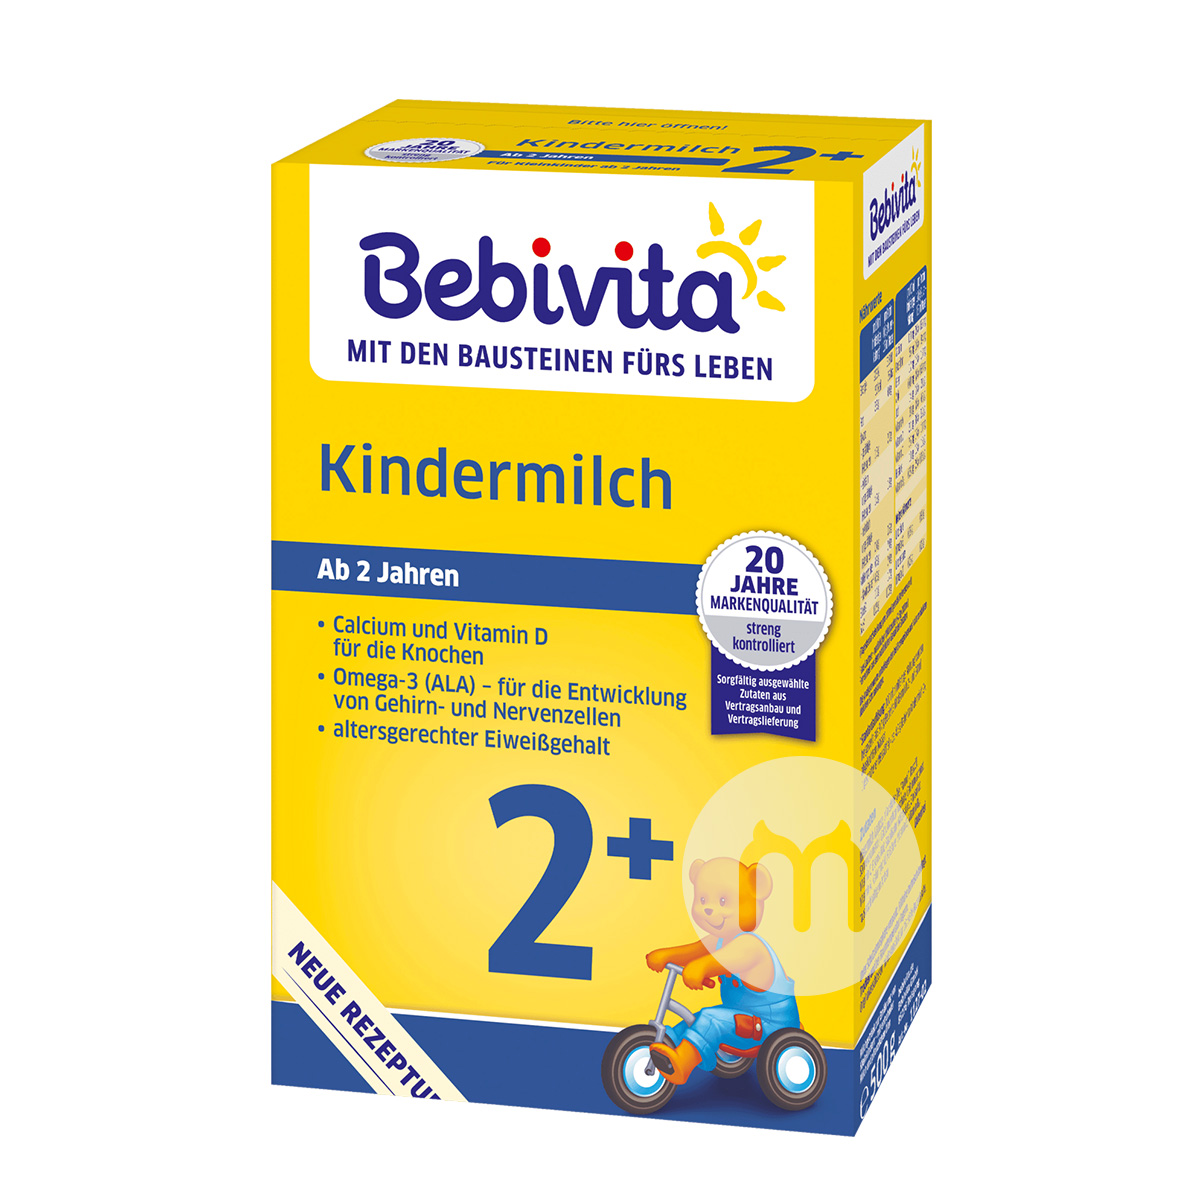 Bebivita German milk powder 2 + sta...